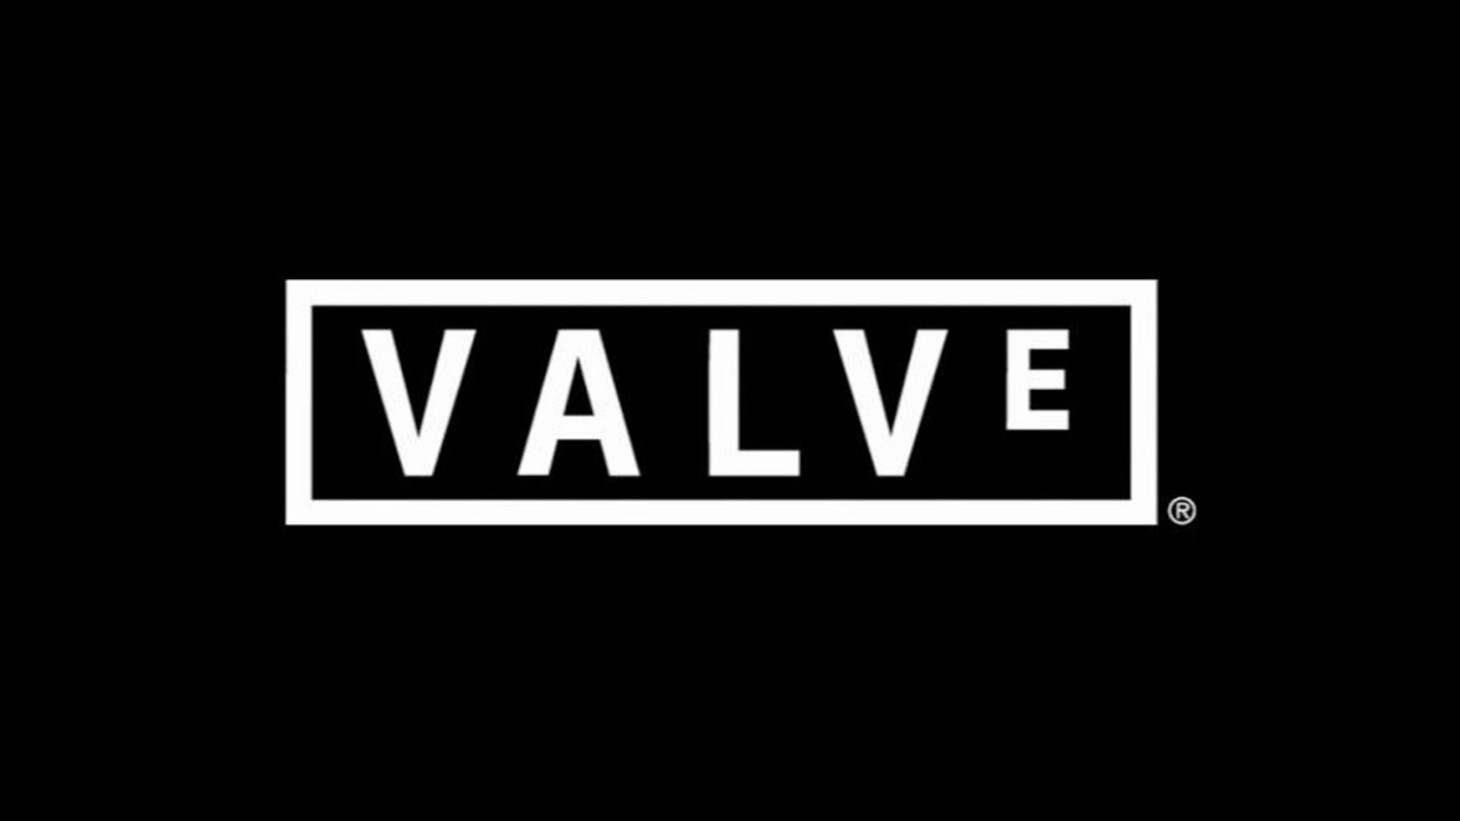 Valve, owner of digital distribution store Steam